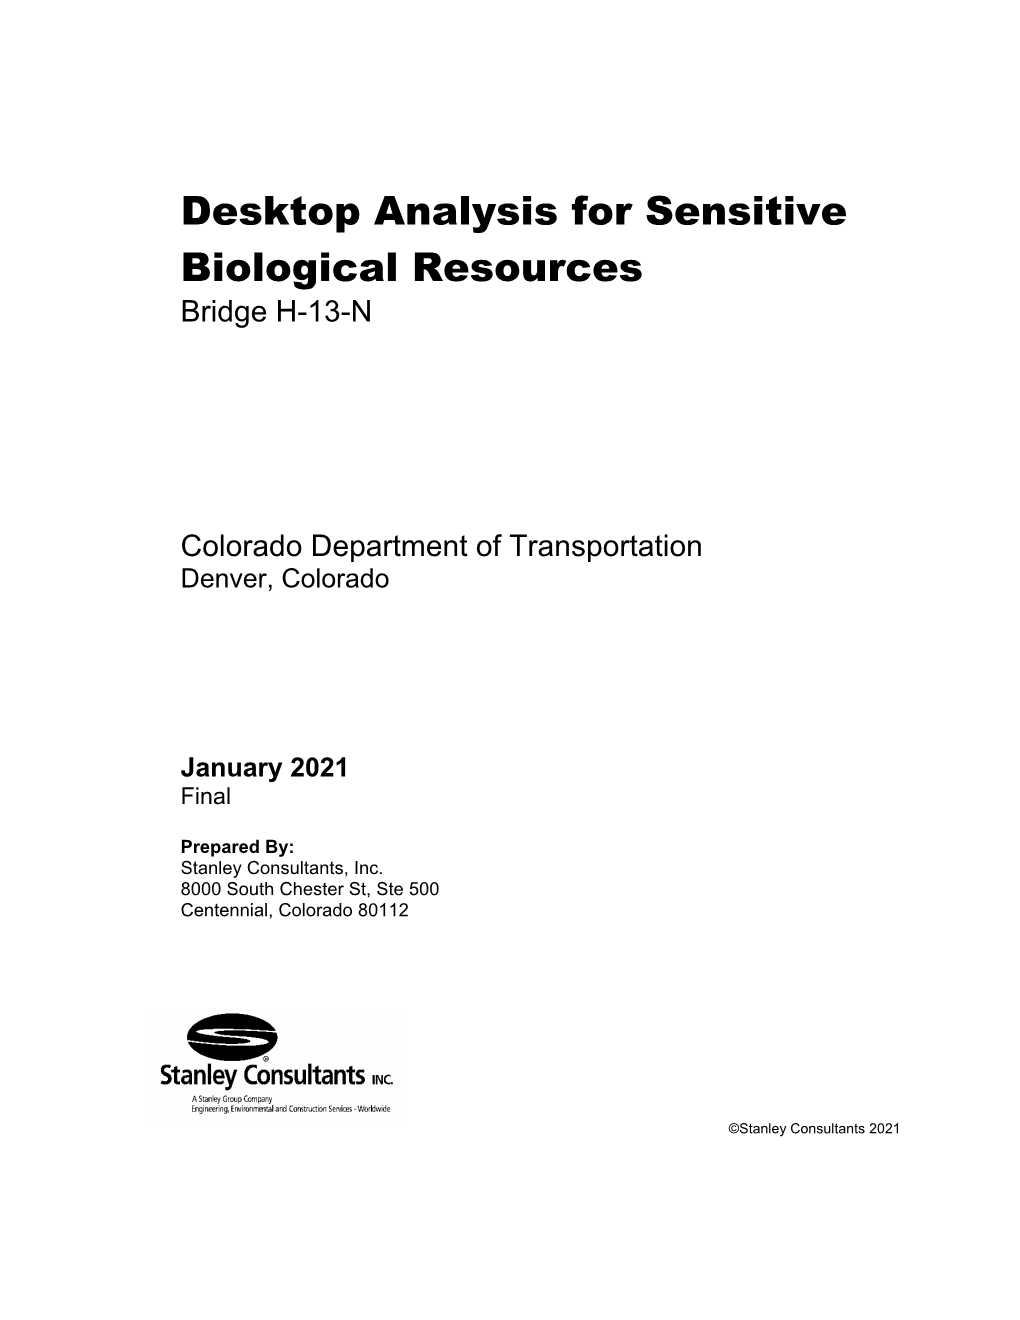 Desktop Analysis for Sensitive Biological Resources Bridge H-13-N